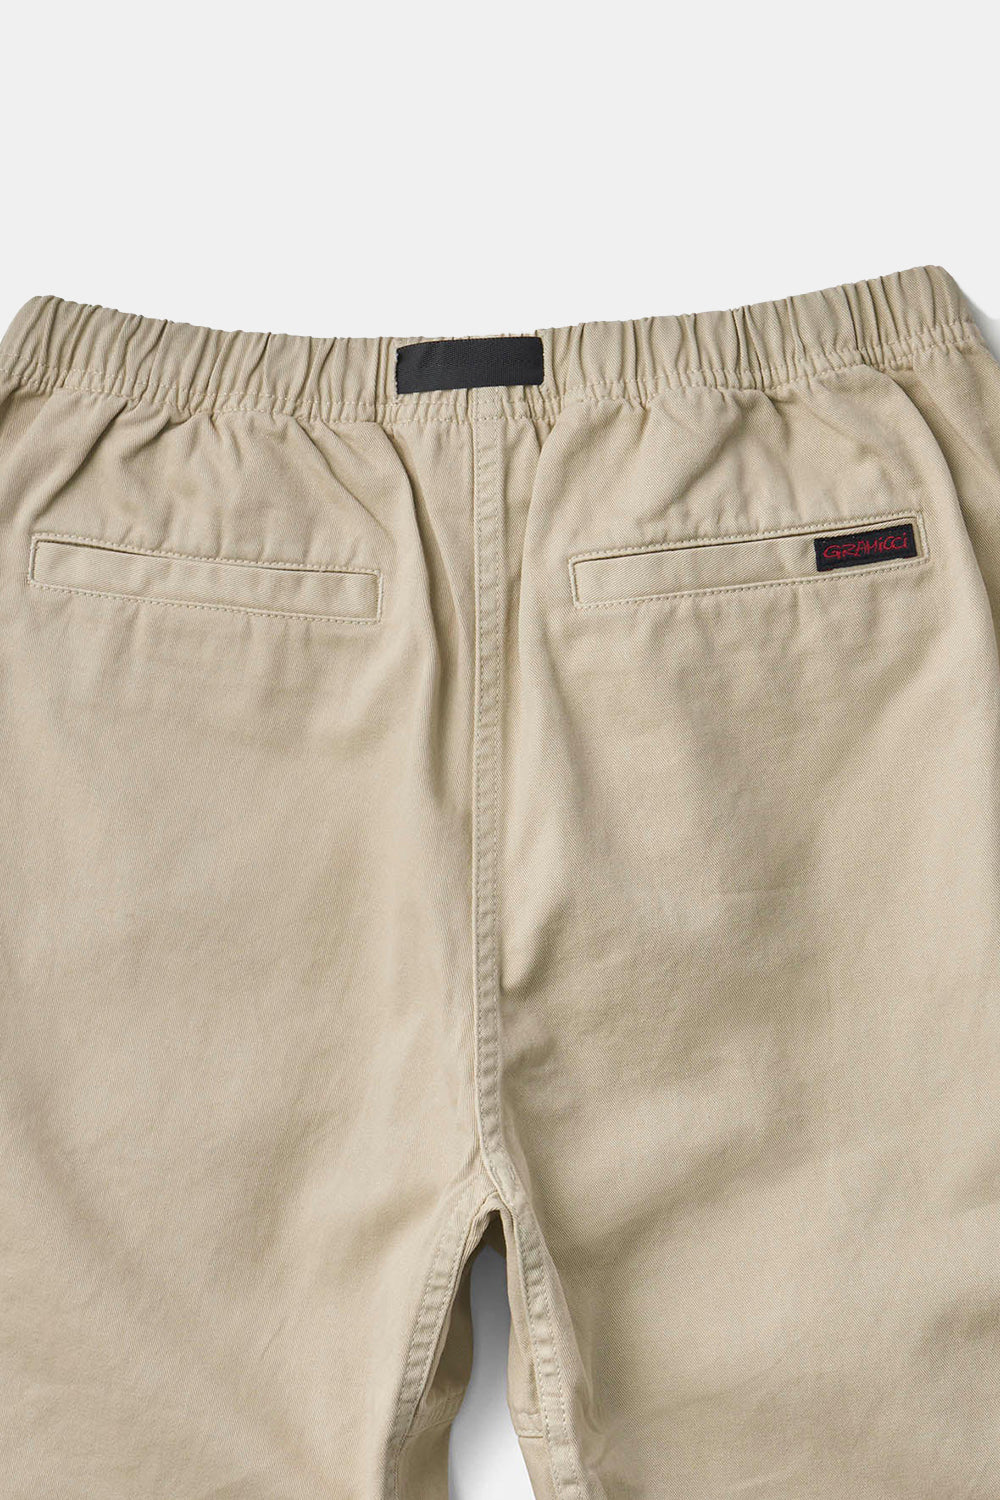 Gramicci G-Shorts Double-ringspun Organic Cotton Twill (U.S Chino)